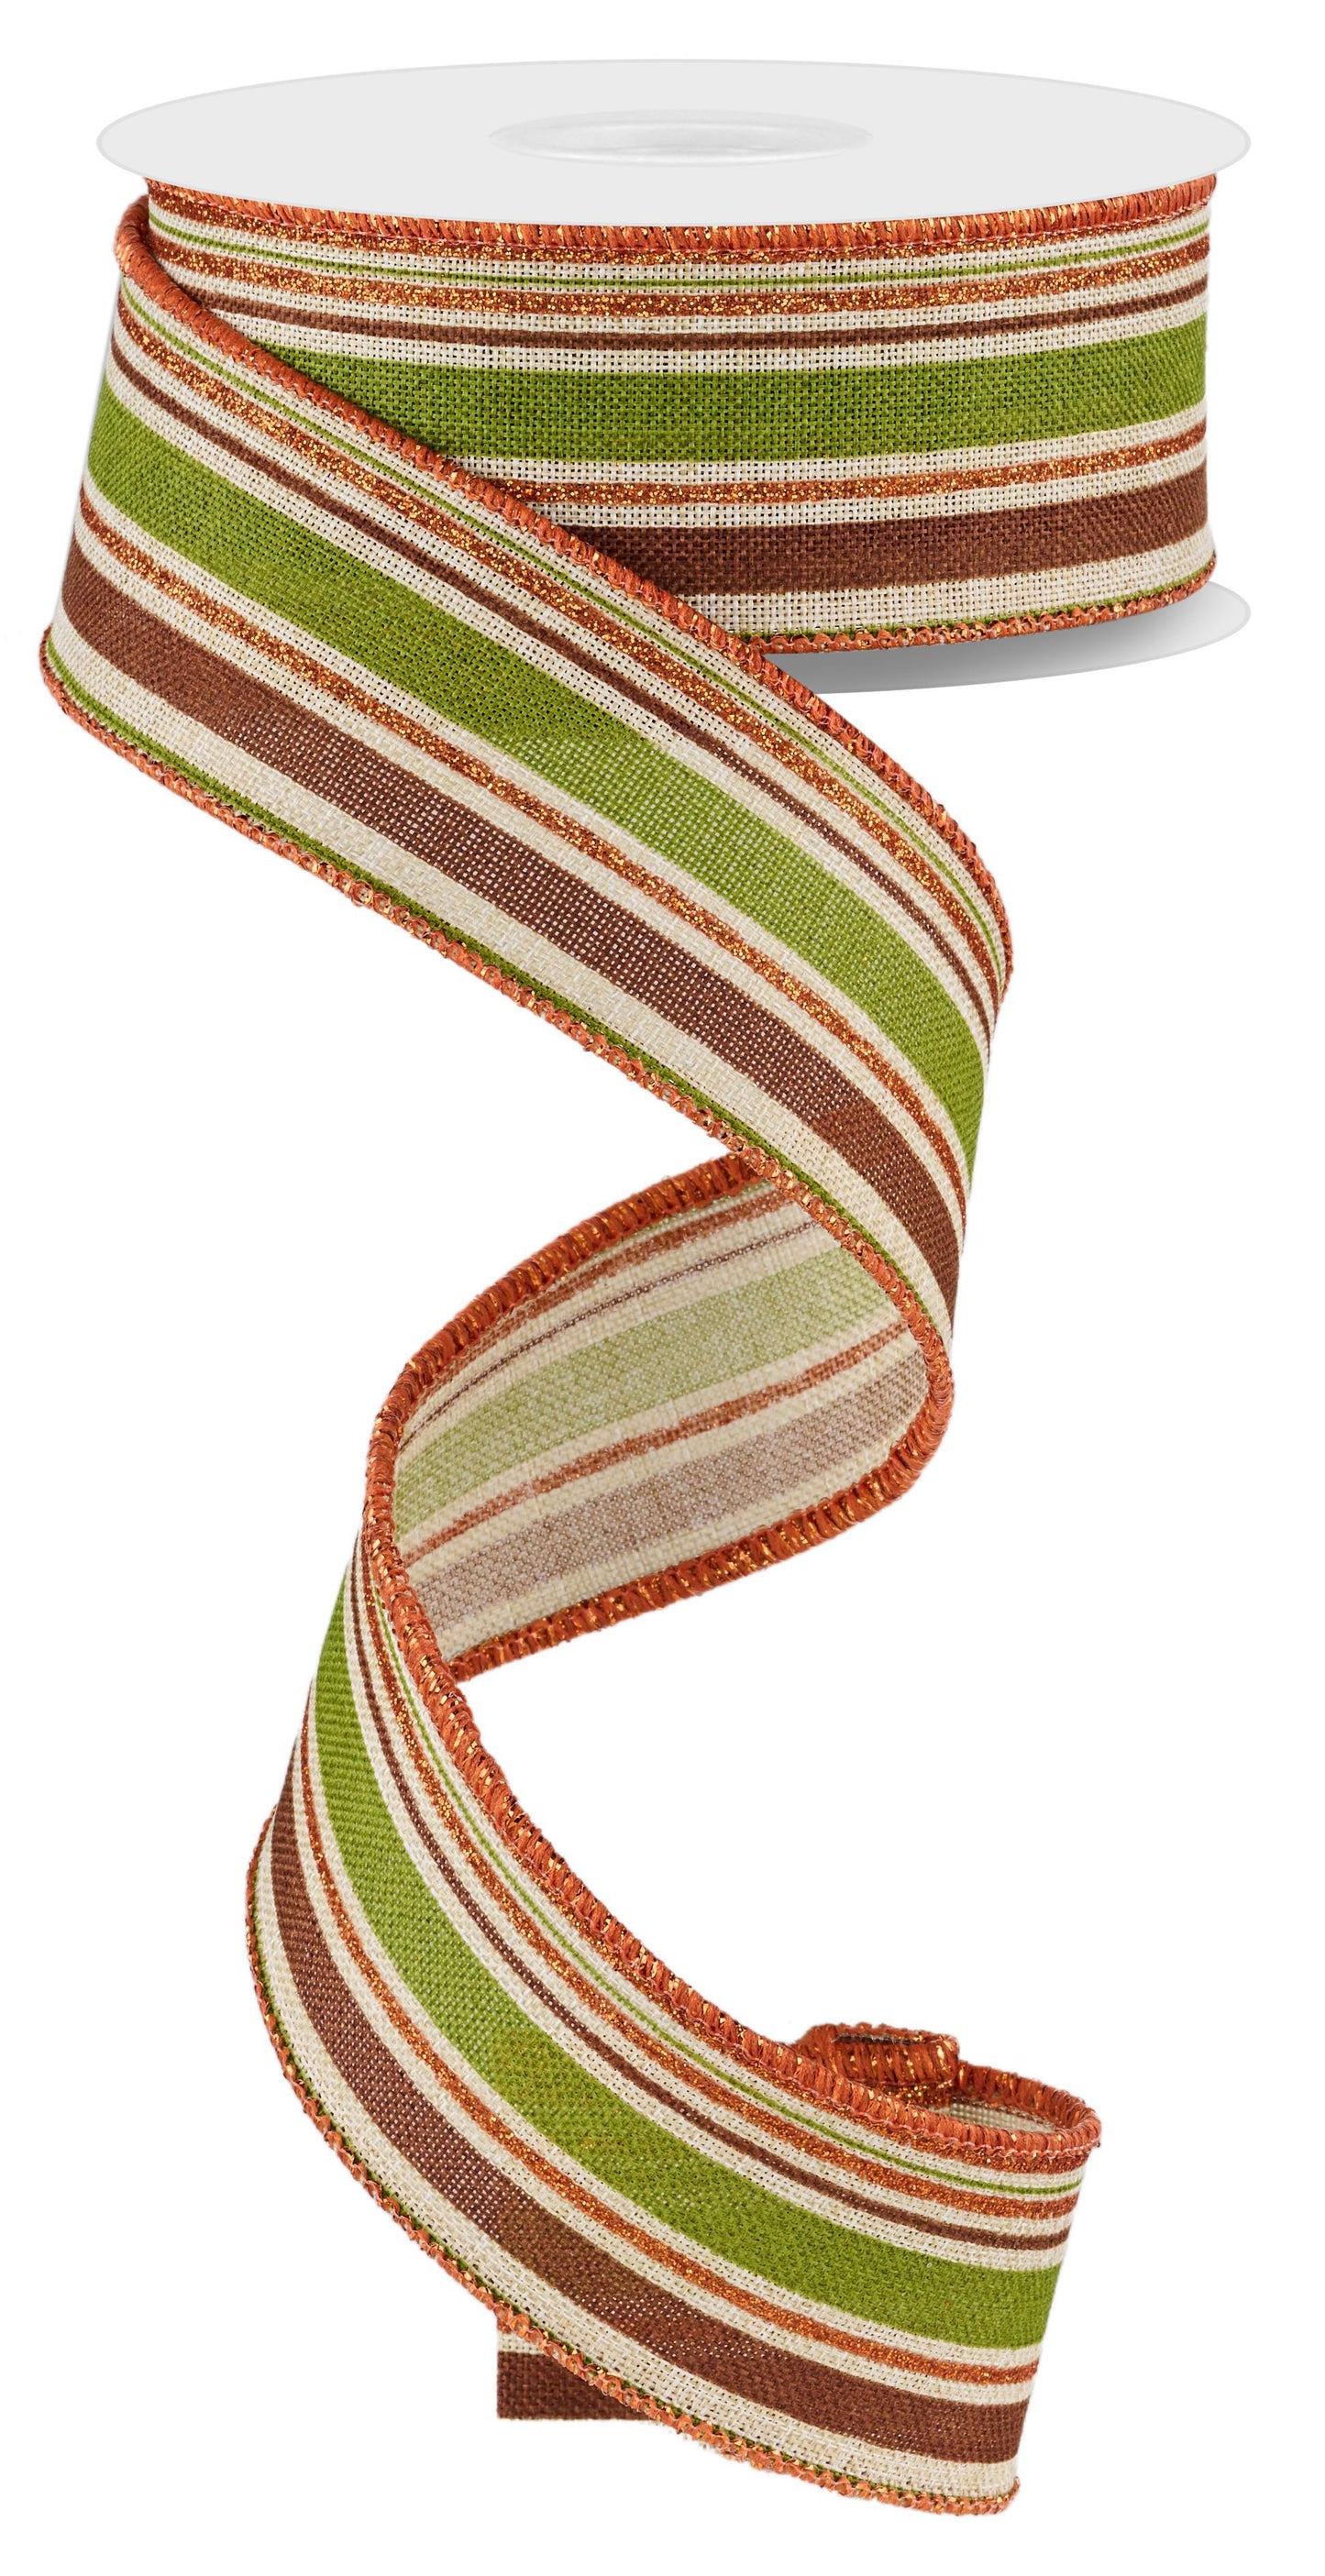 Wired Ribbon * Vertical Stripe * Lt Natural/Moss/Brown/Orange * 1.5" x 10 Yards * RGE182144